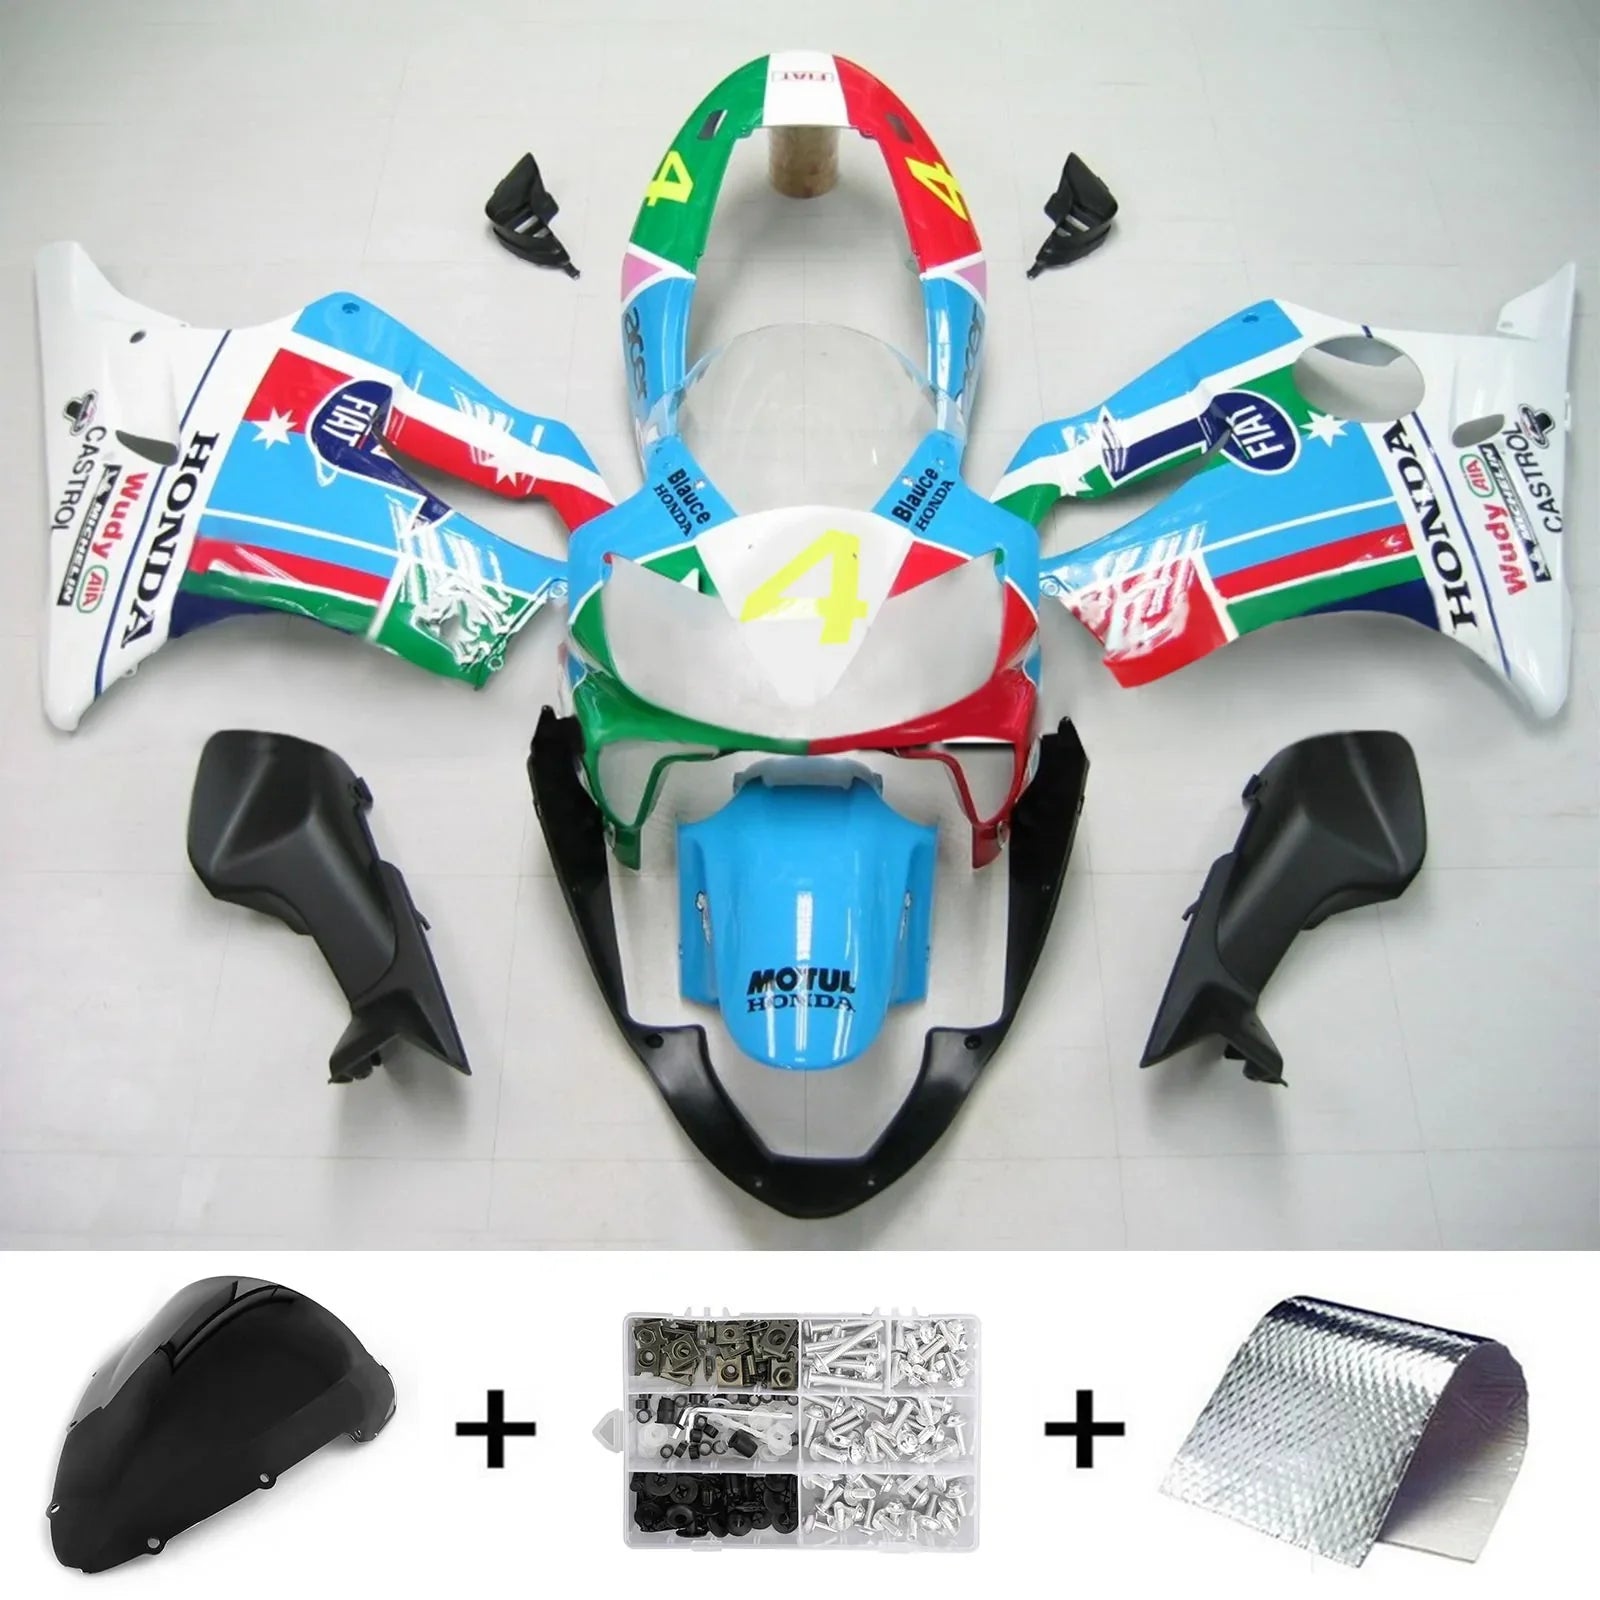 Kit carenatura Amotopart Honda CBR600 F4i 2004-2007